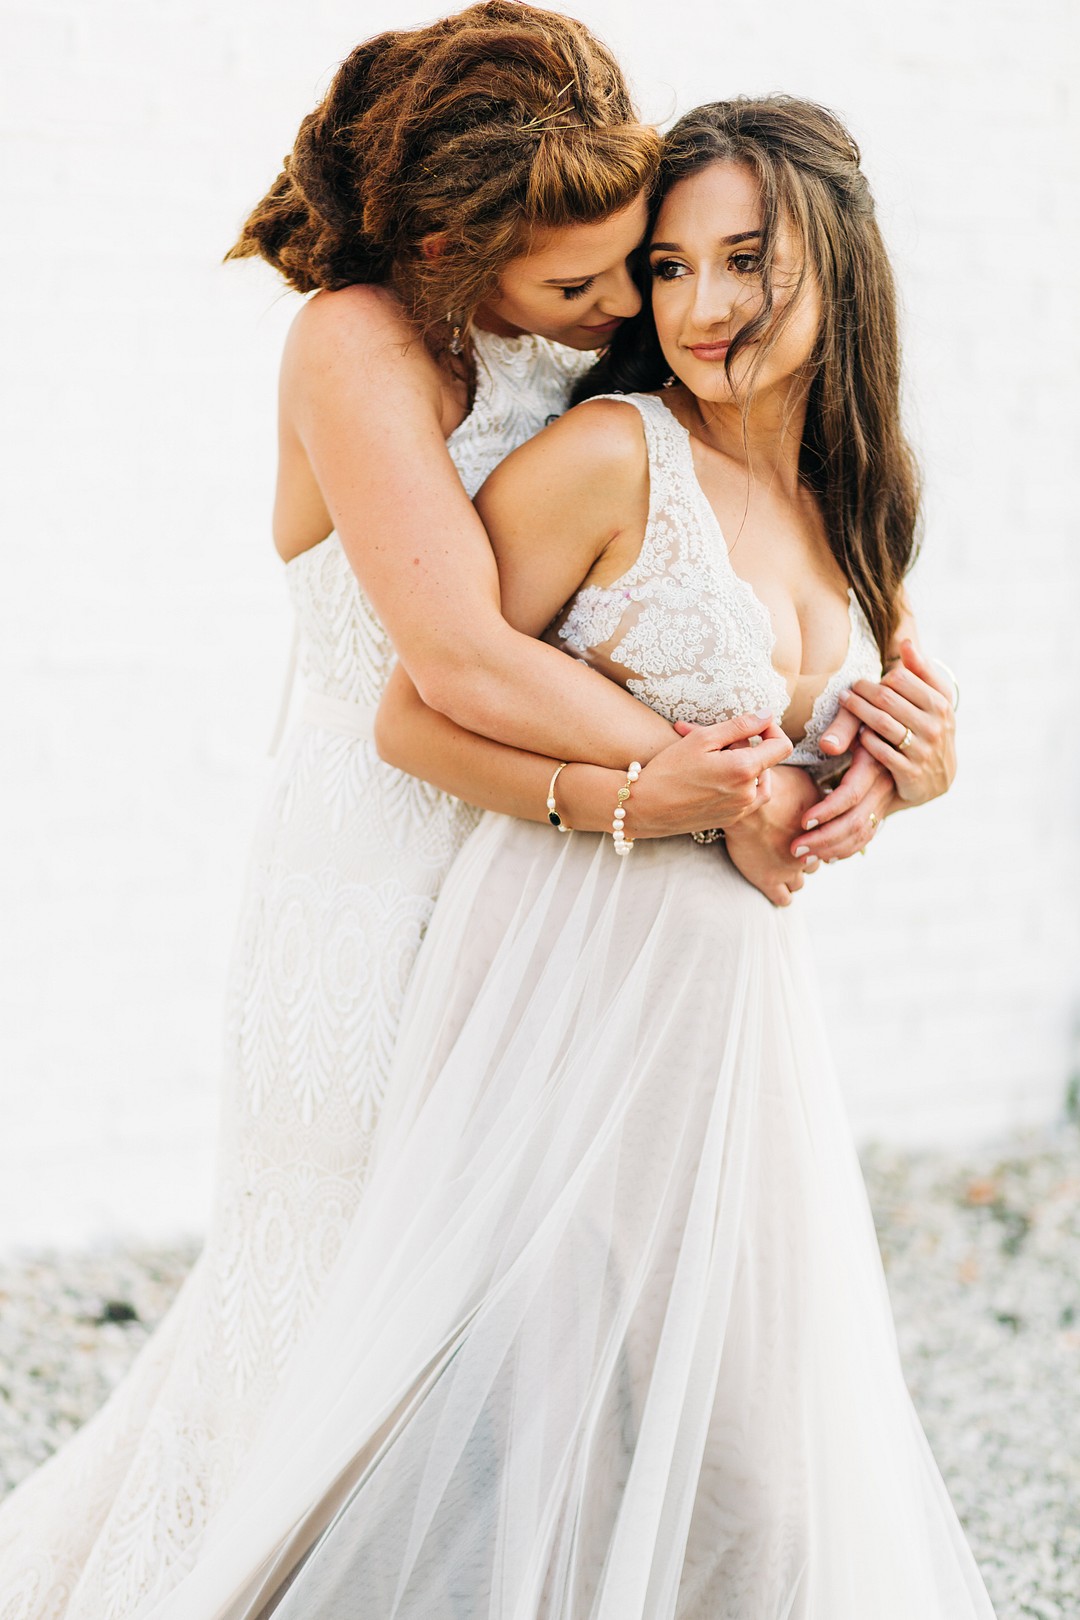 Carefree bohemian beach wedding in Pensacola, Florida LGBTQ+ weddings two brides